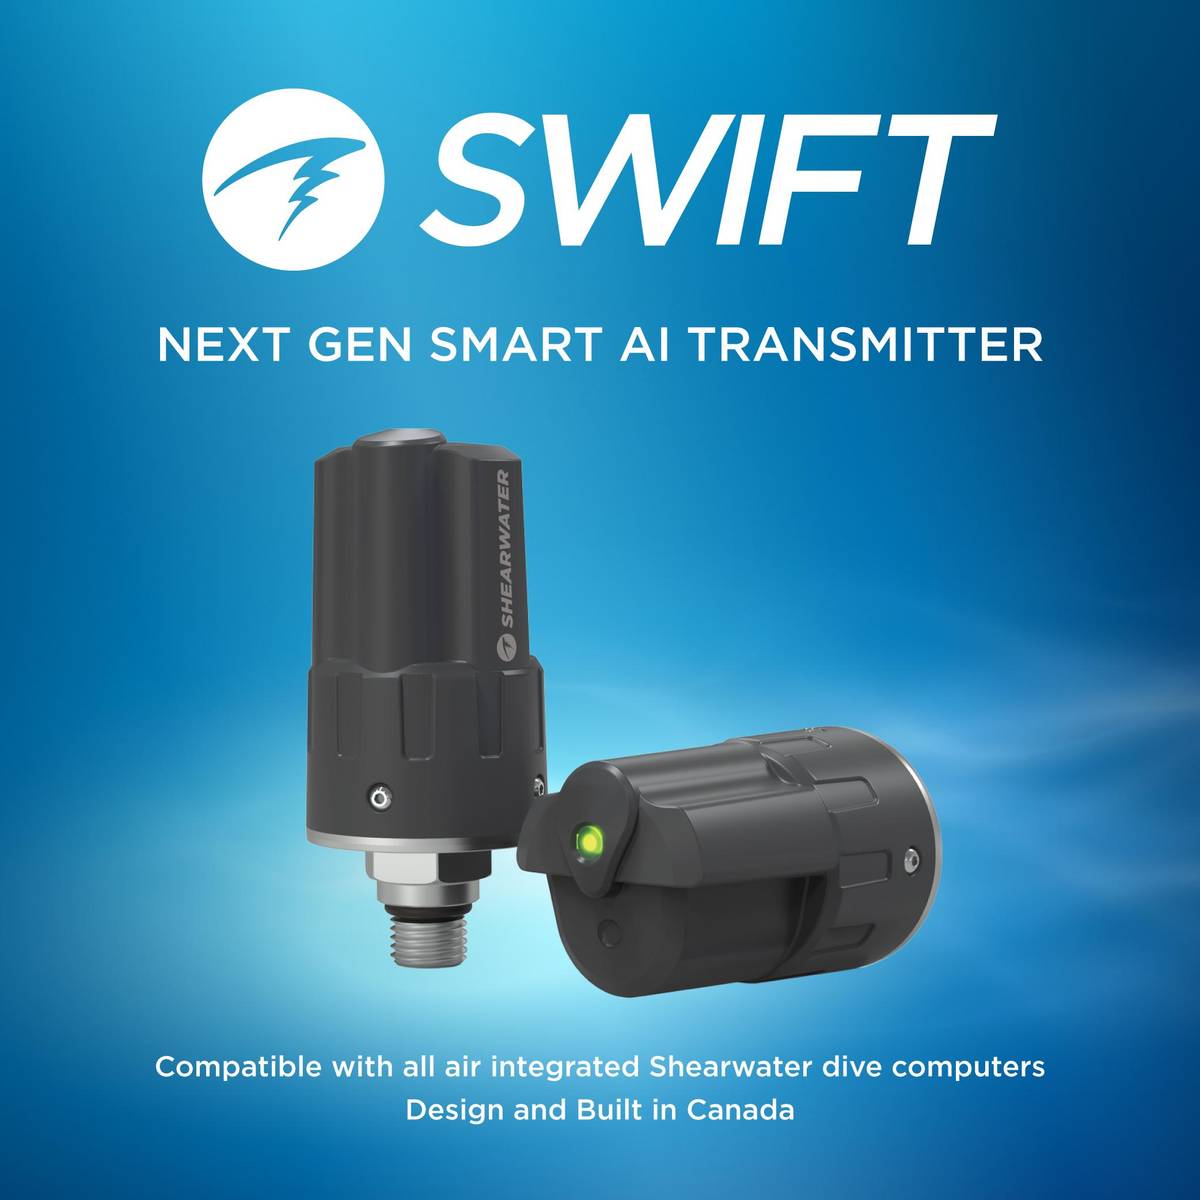 Shearwater Swift Transmitter